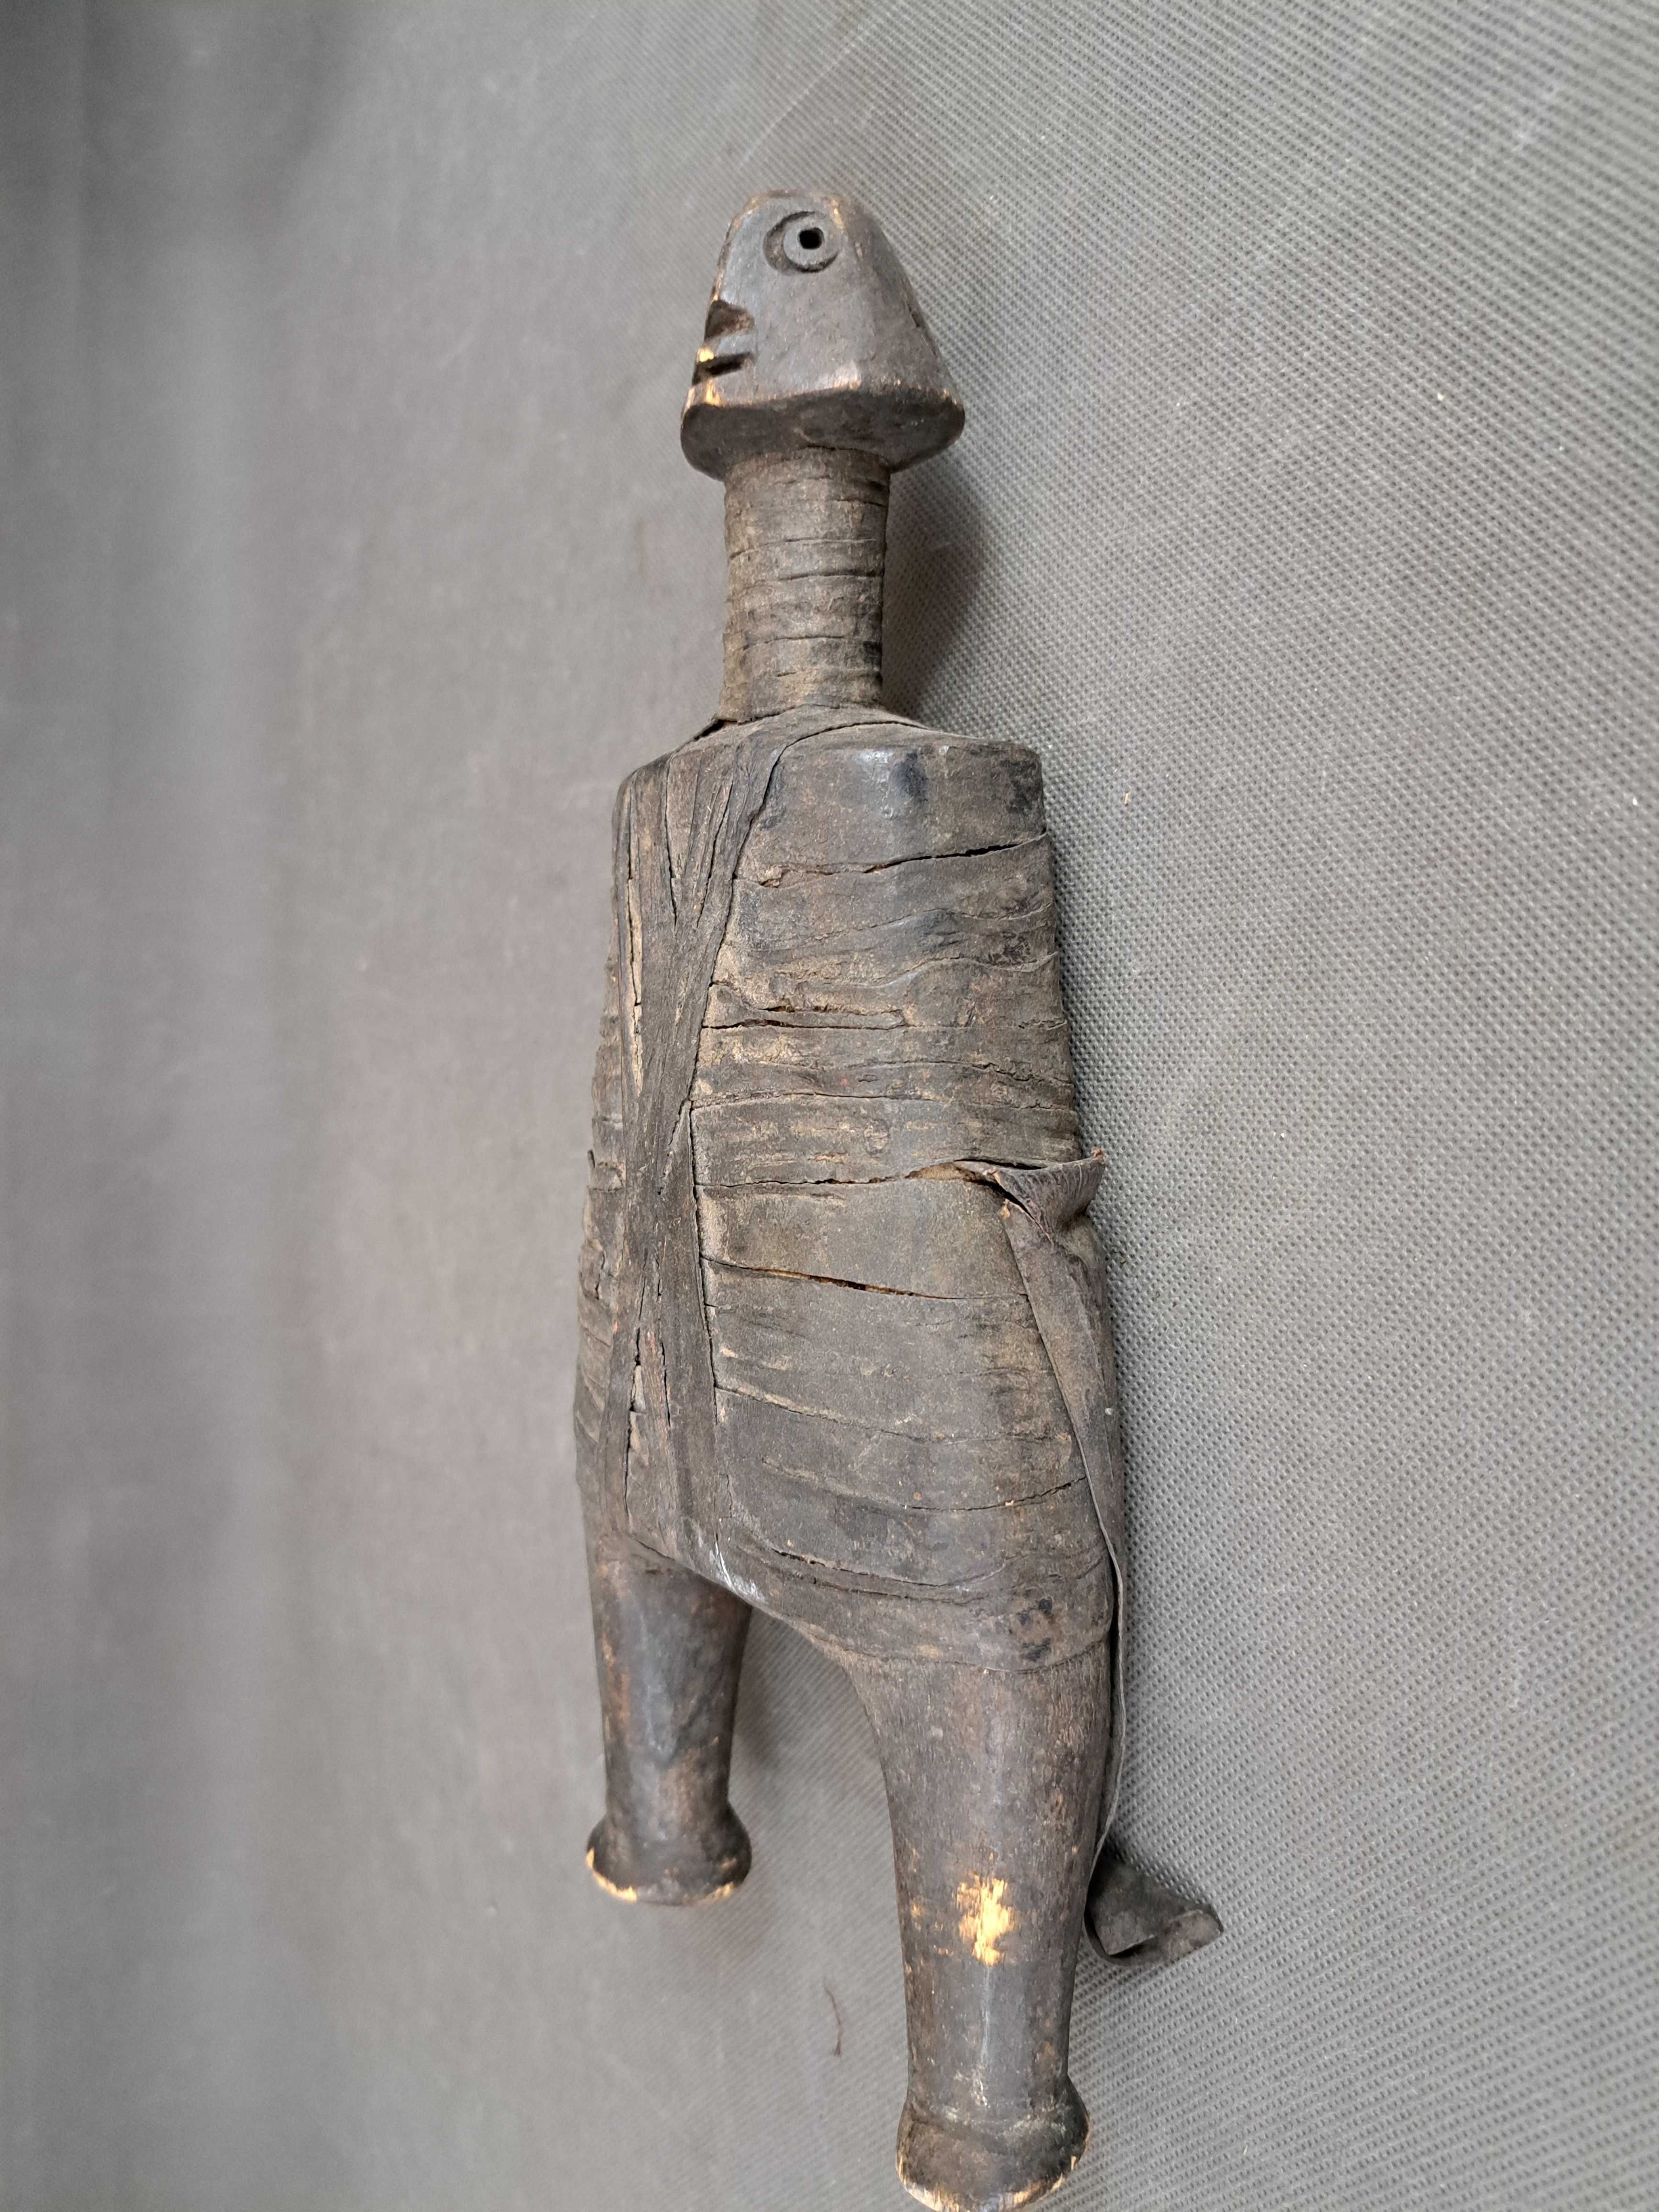 Plemienna sztuka Afryki, rzeźba drewniana, fetysz, Czad